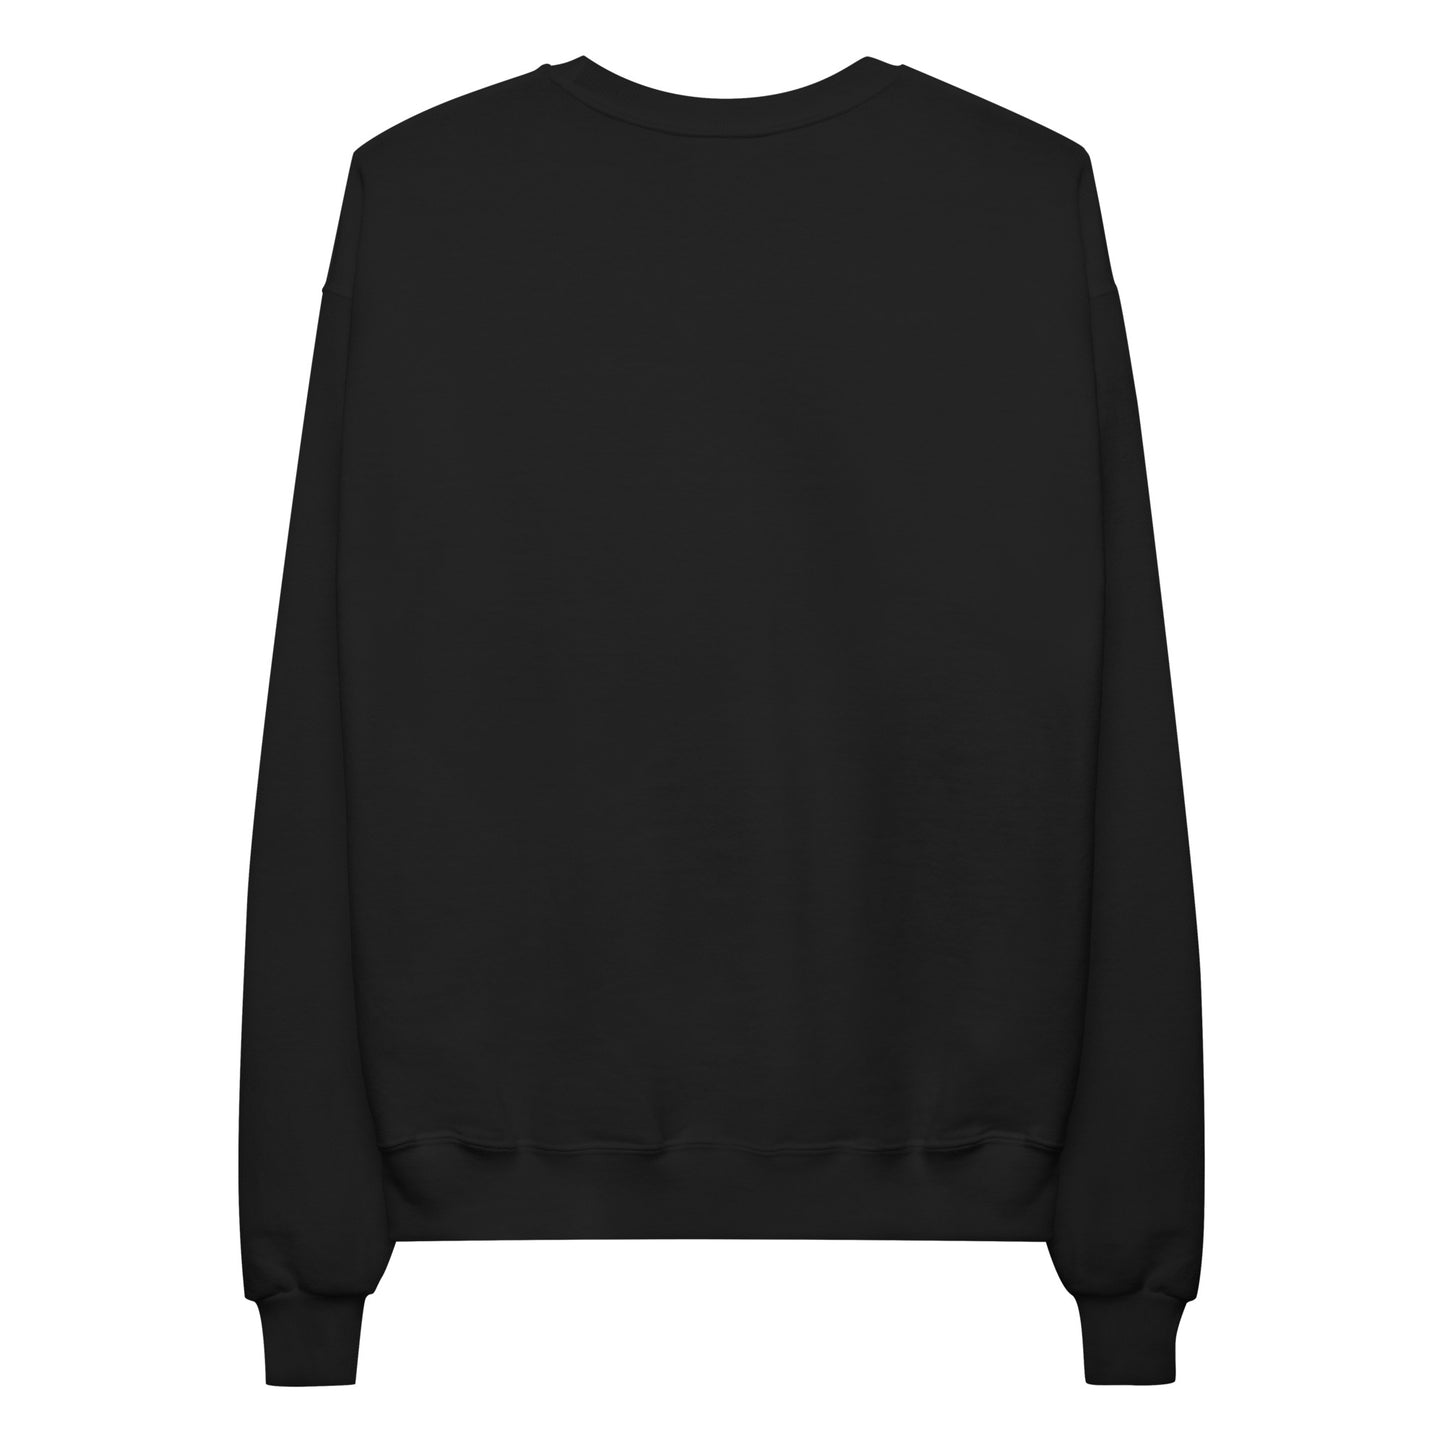 The Dreamer Unisex Fleece Sweatshirt